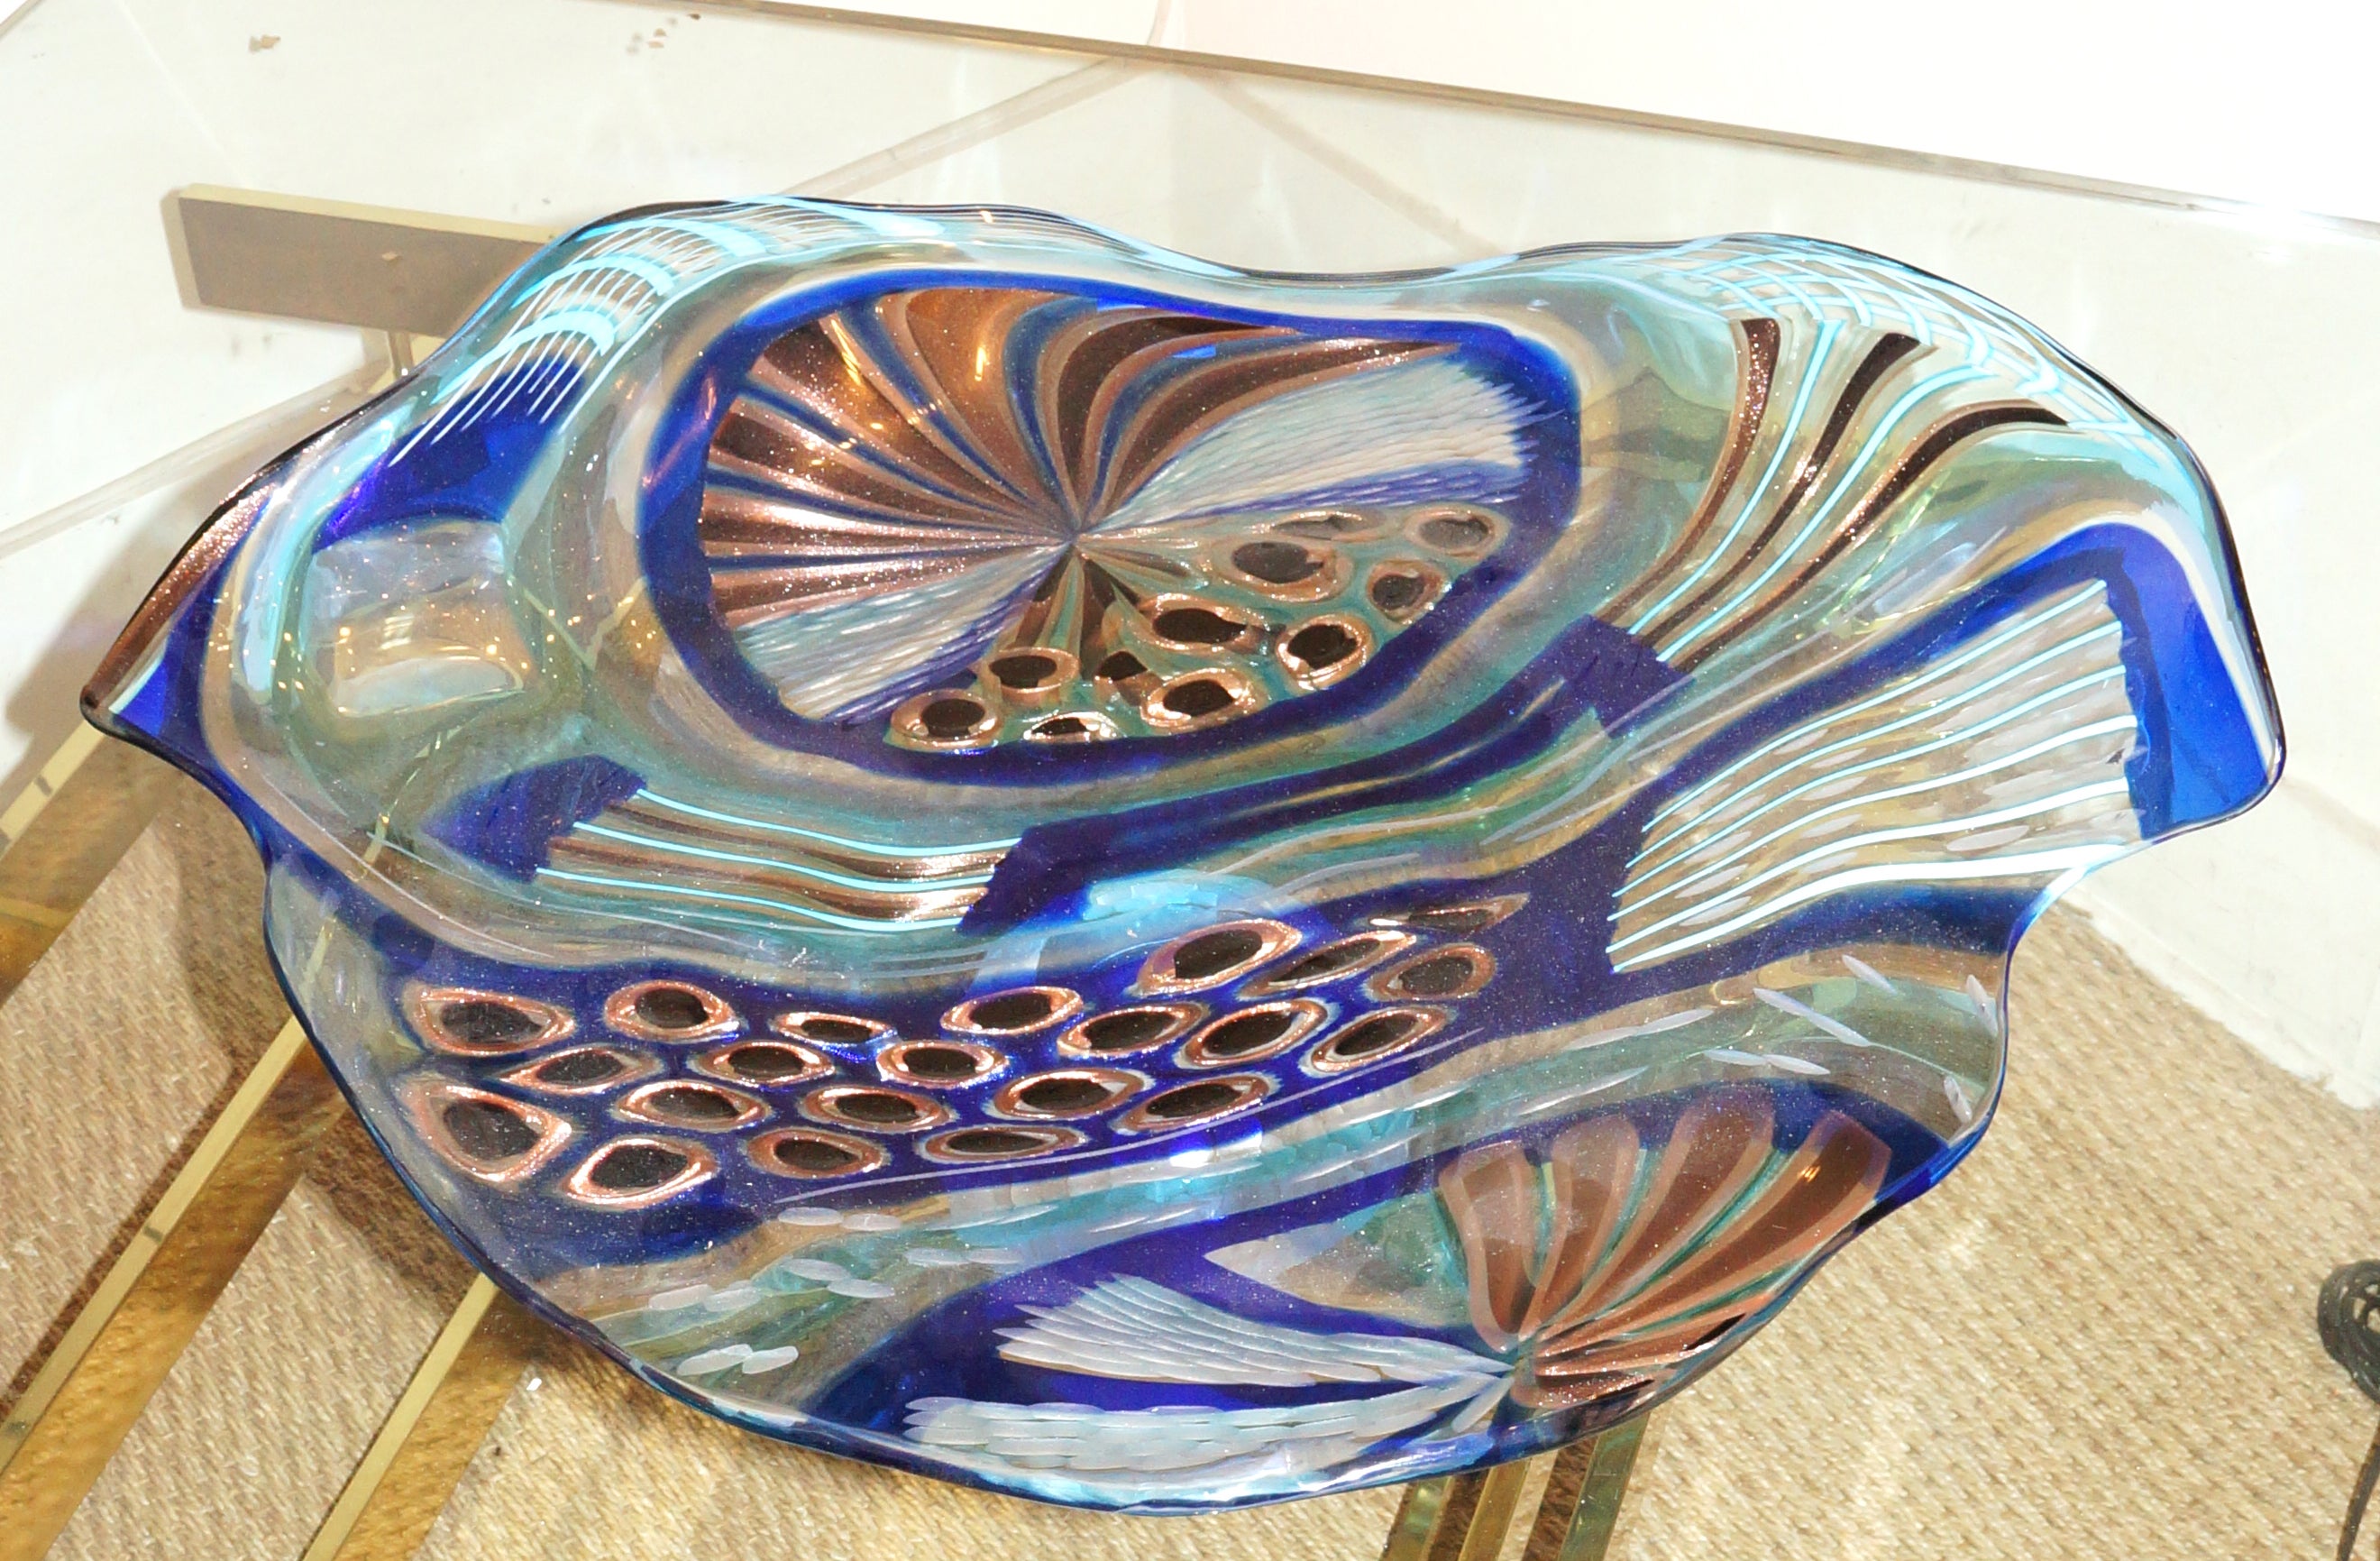 Artistic Hand Blown Murano Glass Centerpiece Vessel